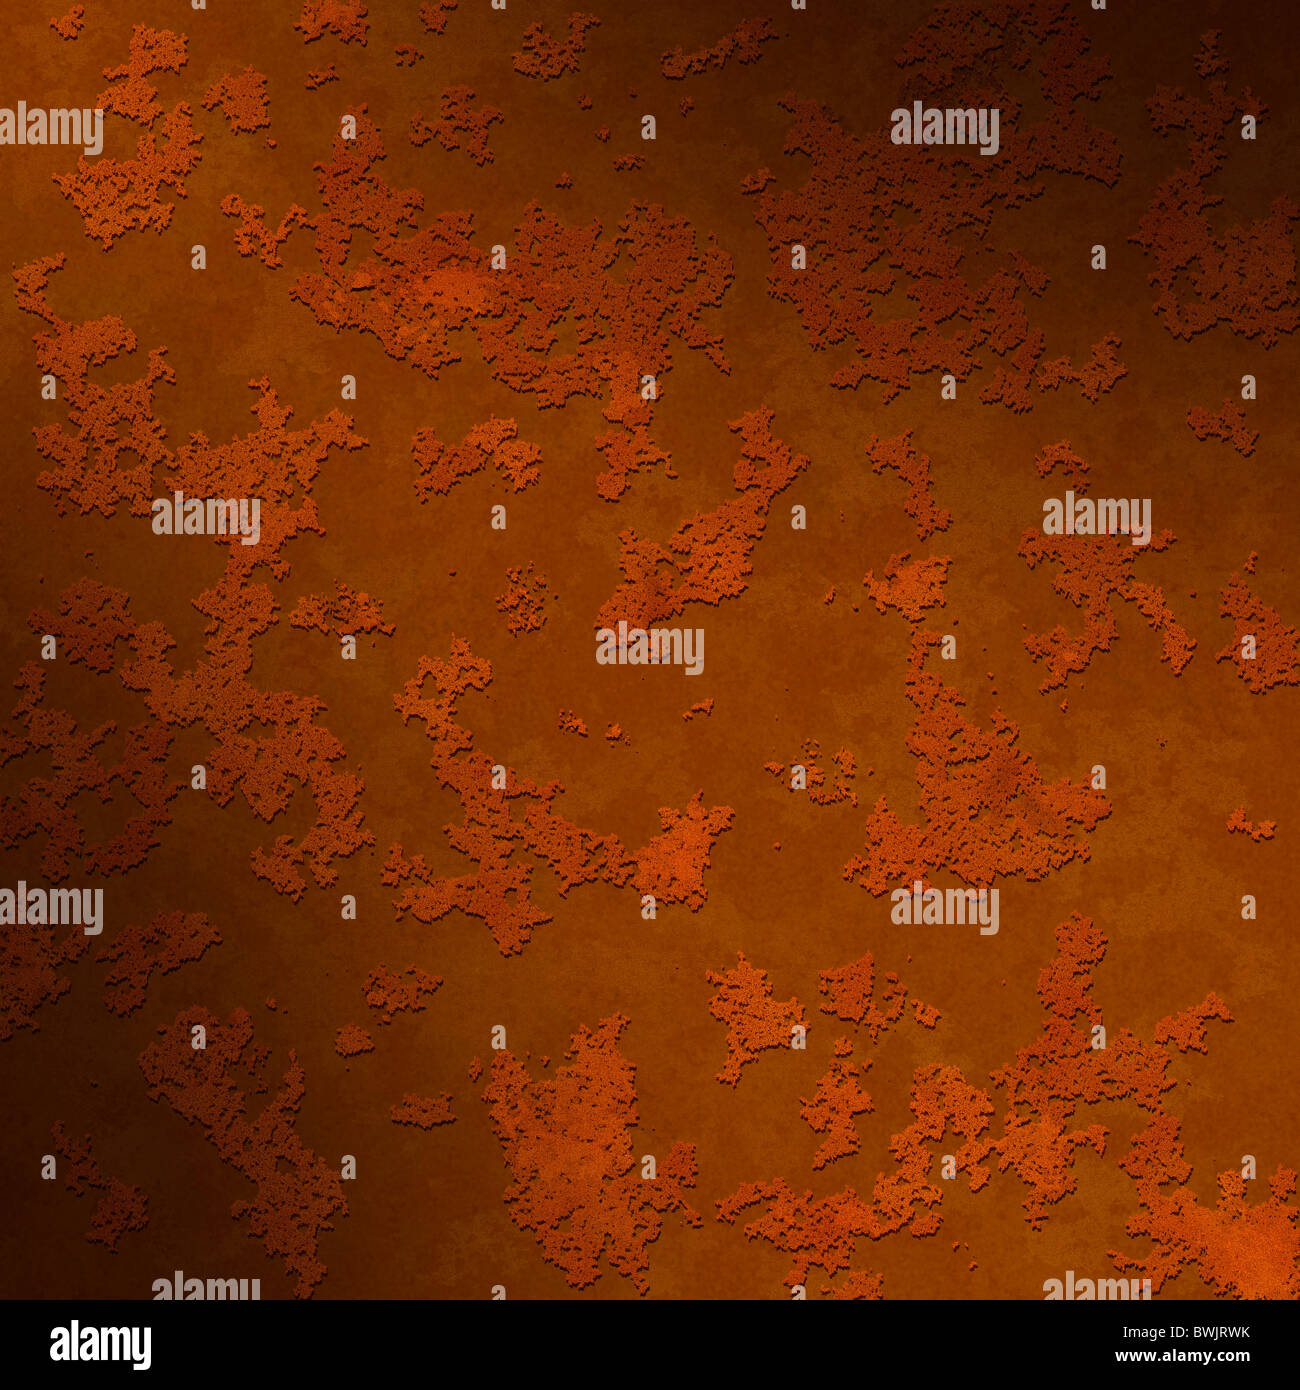 Rusty background illustration dramatically lit Stock Photo